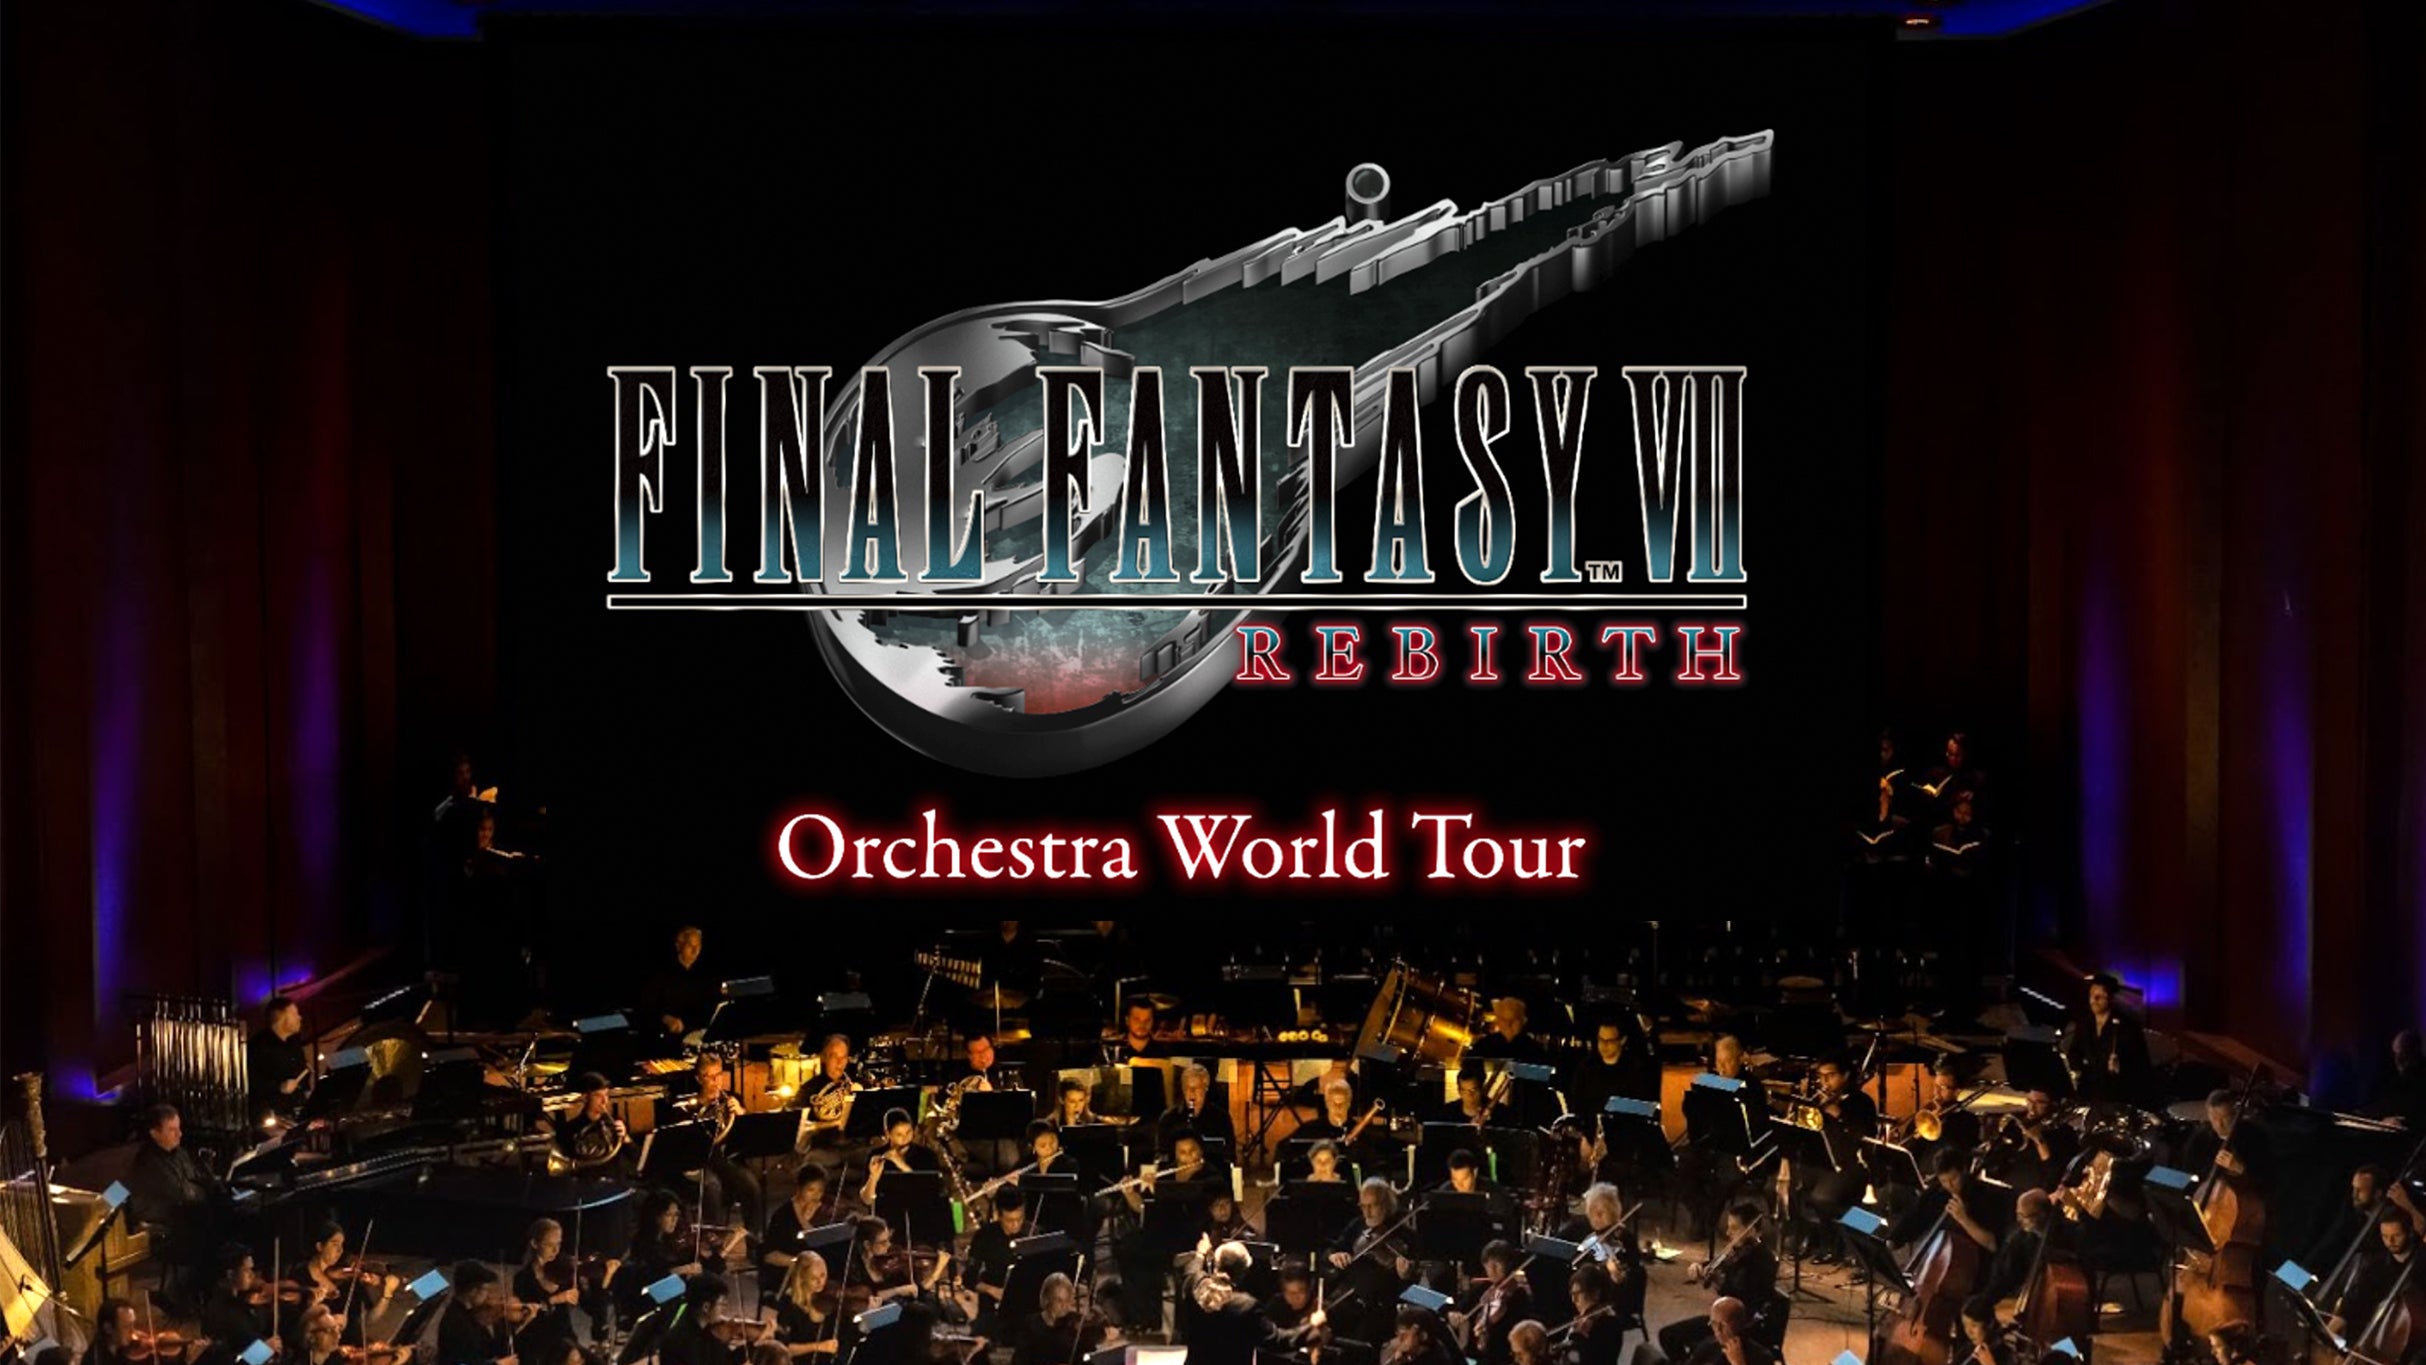 FINAL FANTASY VII REBIRTH Orchestra World Tour in Boston promo photo for Official Platinum Onsale presale offer code